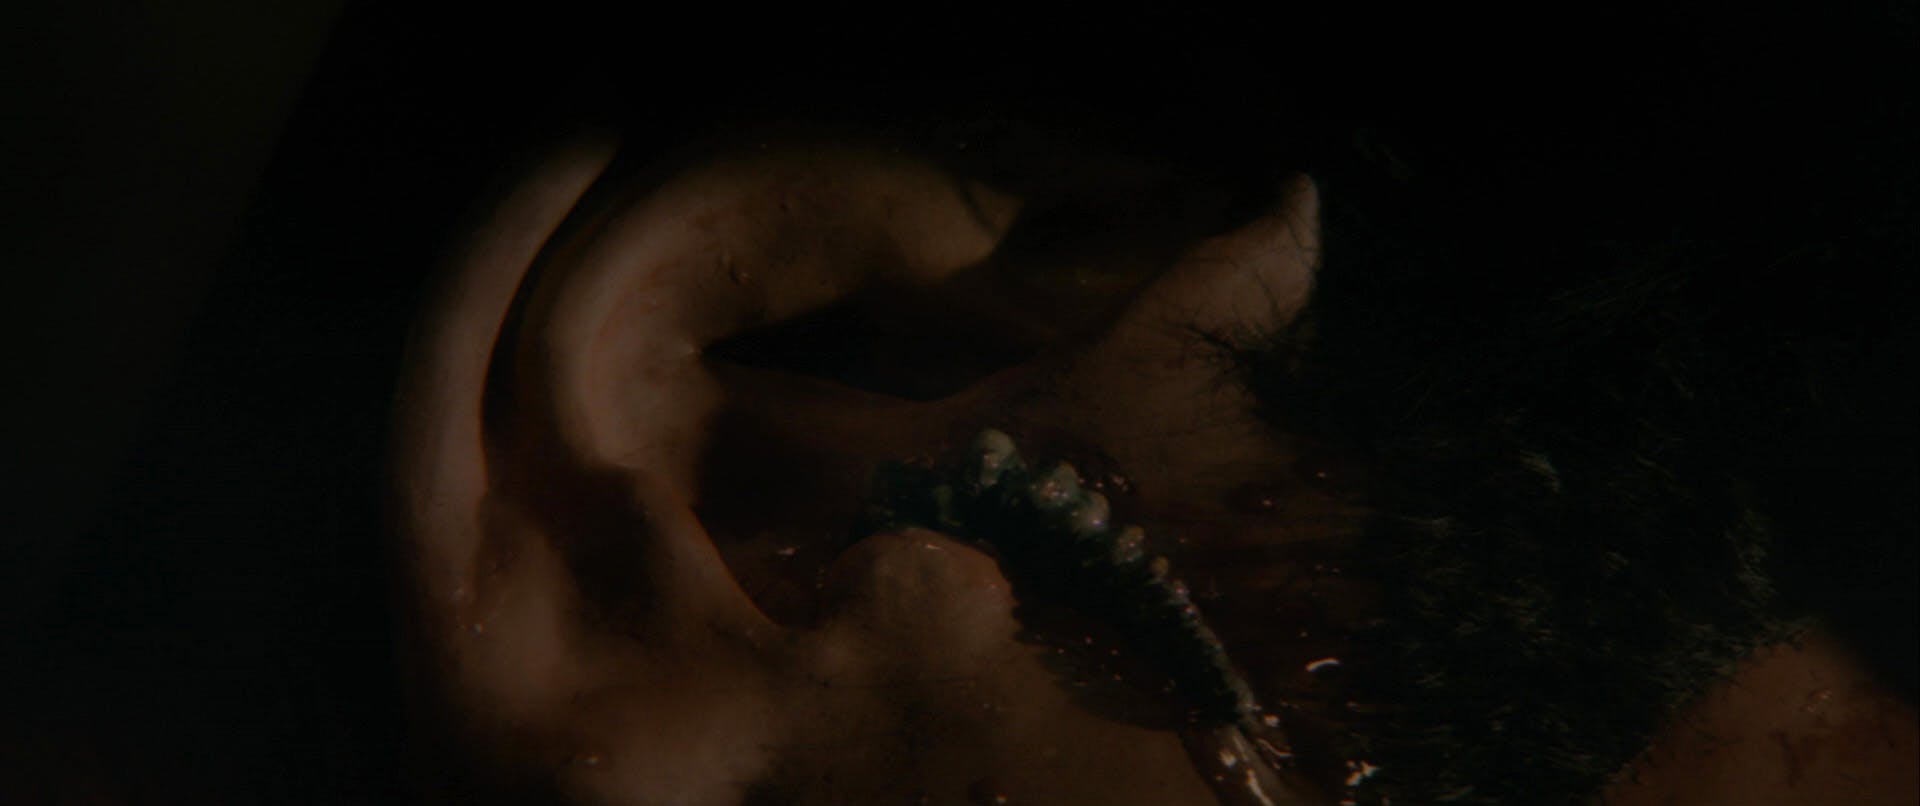 A Ceti eel larva emerges from Pavel Chekov's ear in Star Trek II: The Wrath of Khan